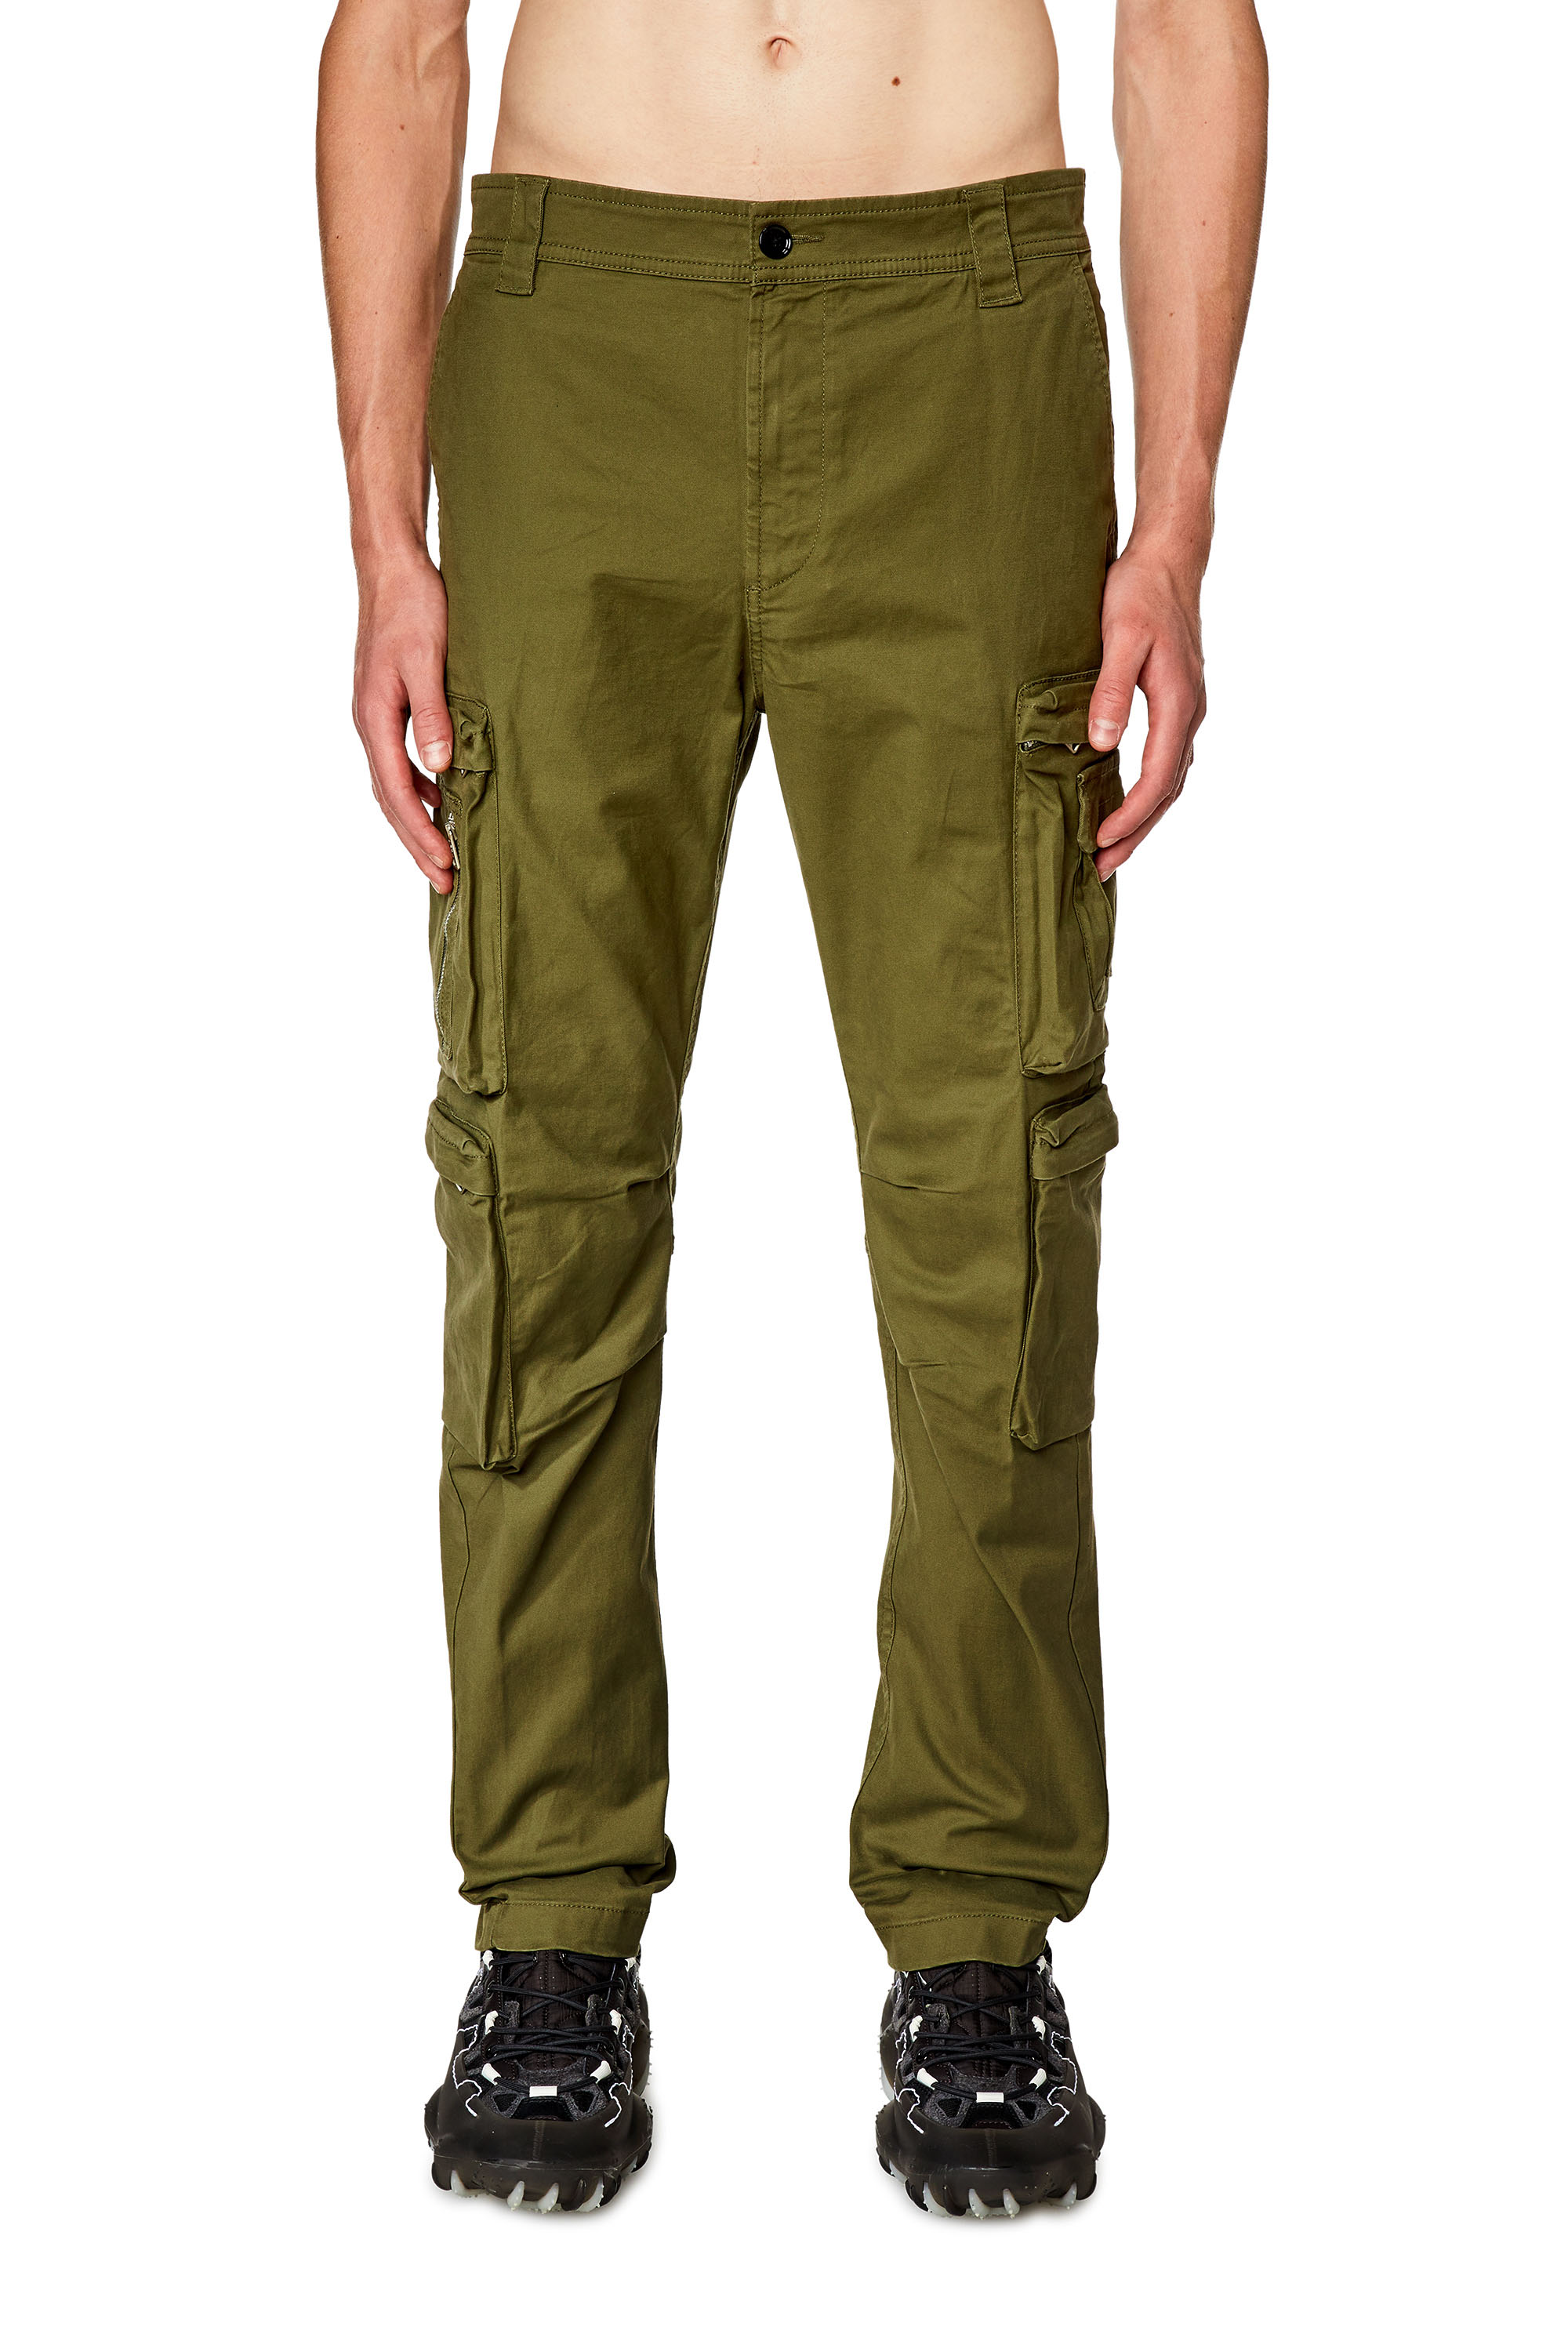 Diesel - Pantalon cargo avec poche zippée - Pantalons - Homme - Vert